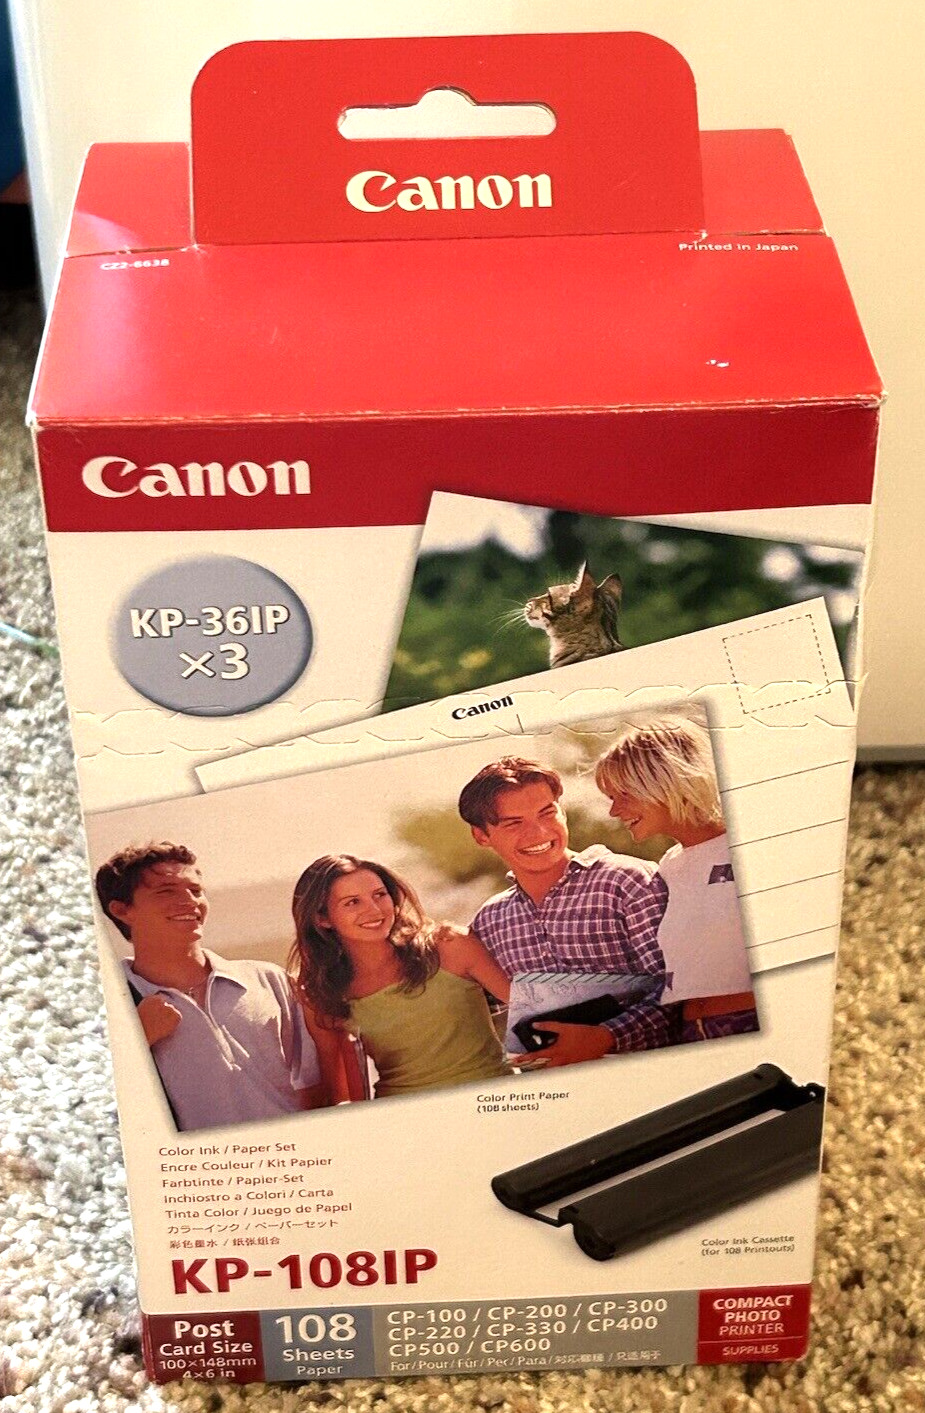 Canon 3 Color Ink Cartridges KP-361P & 108 Sheets Print Paper KP-1081P NEW *READ